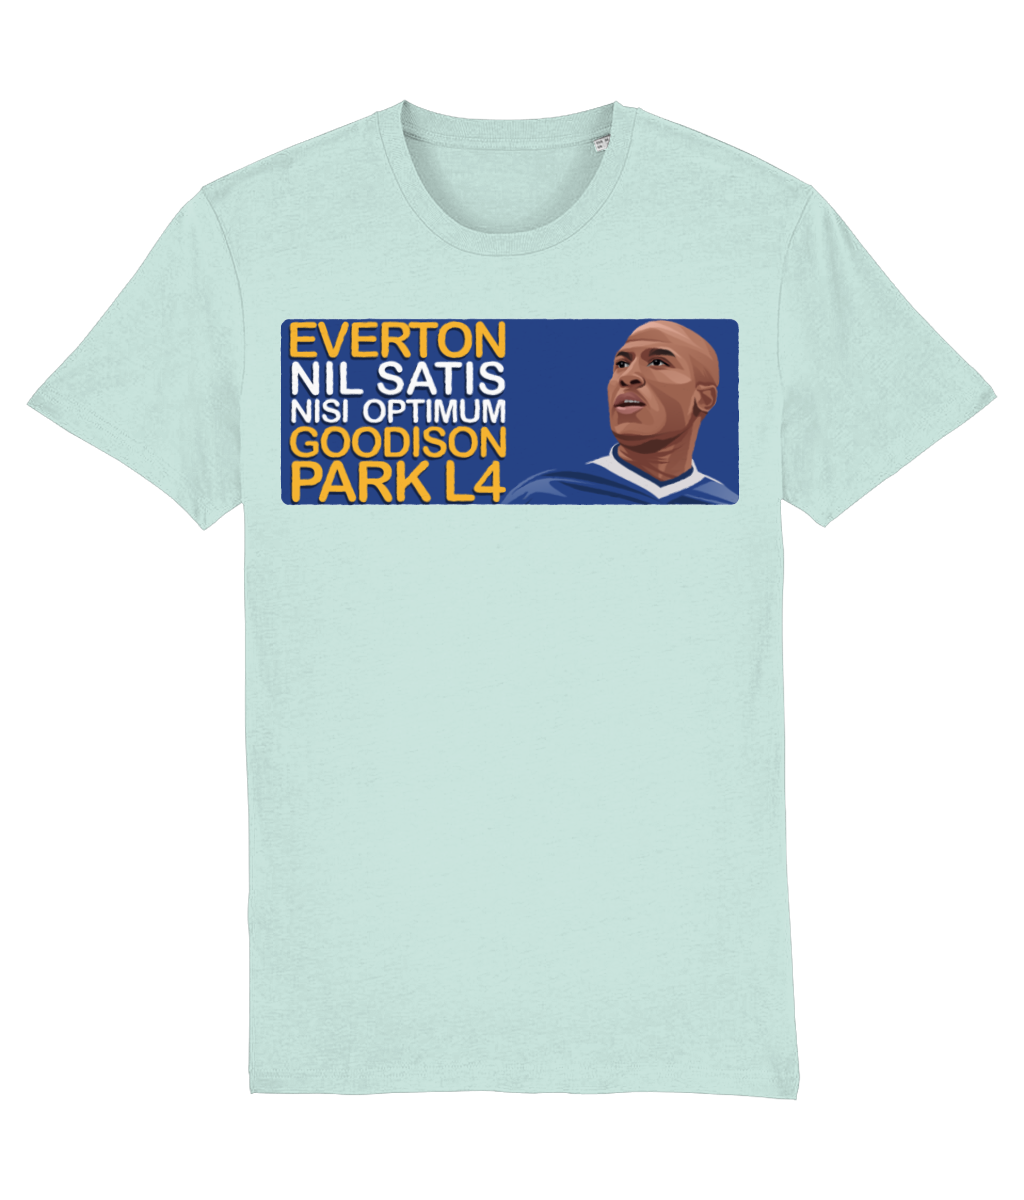 Everton Kevin Campbell Goodison Park L4 Unisex T-Shirt